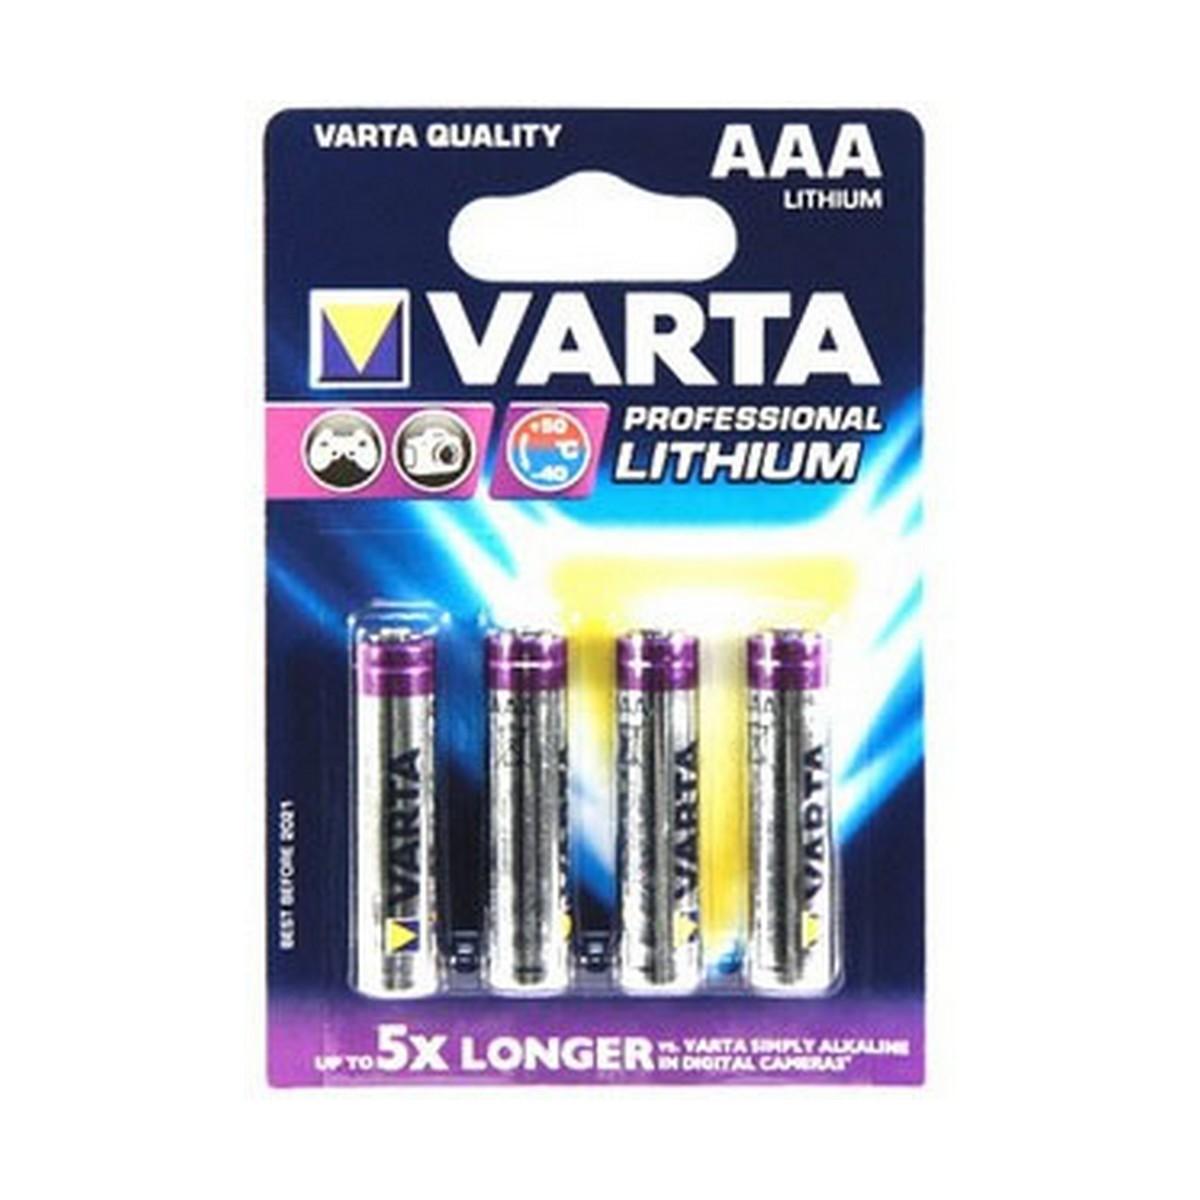 Se Varta Professional Lithium Aaa 4 Pack (b) - Batteri hos Boligcenter.dk